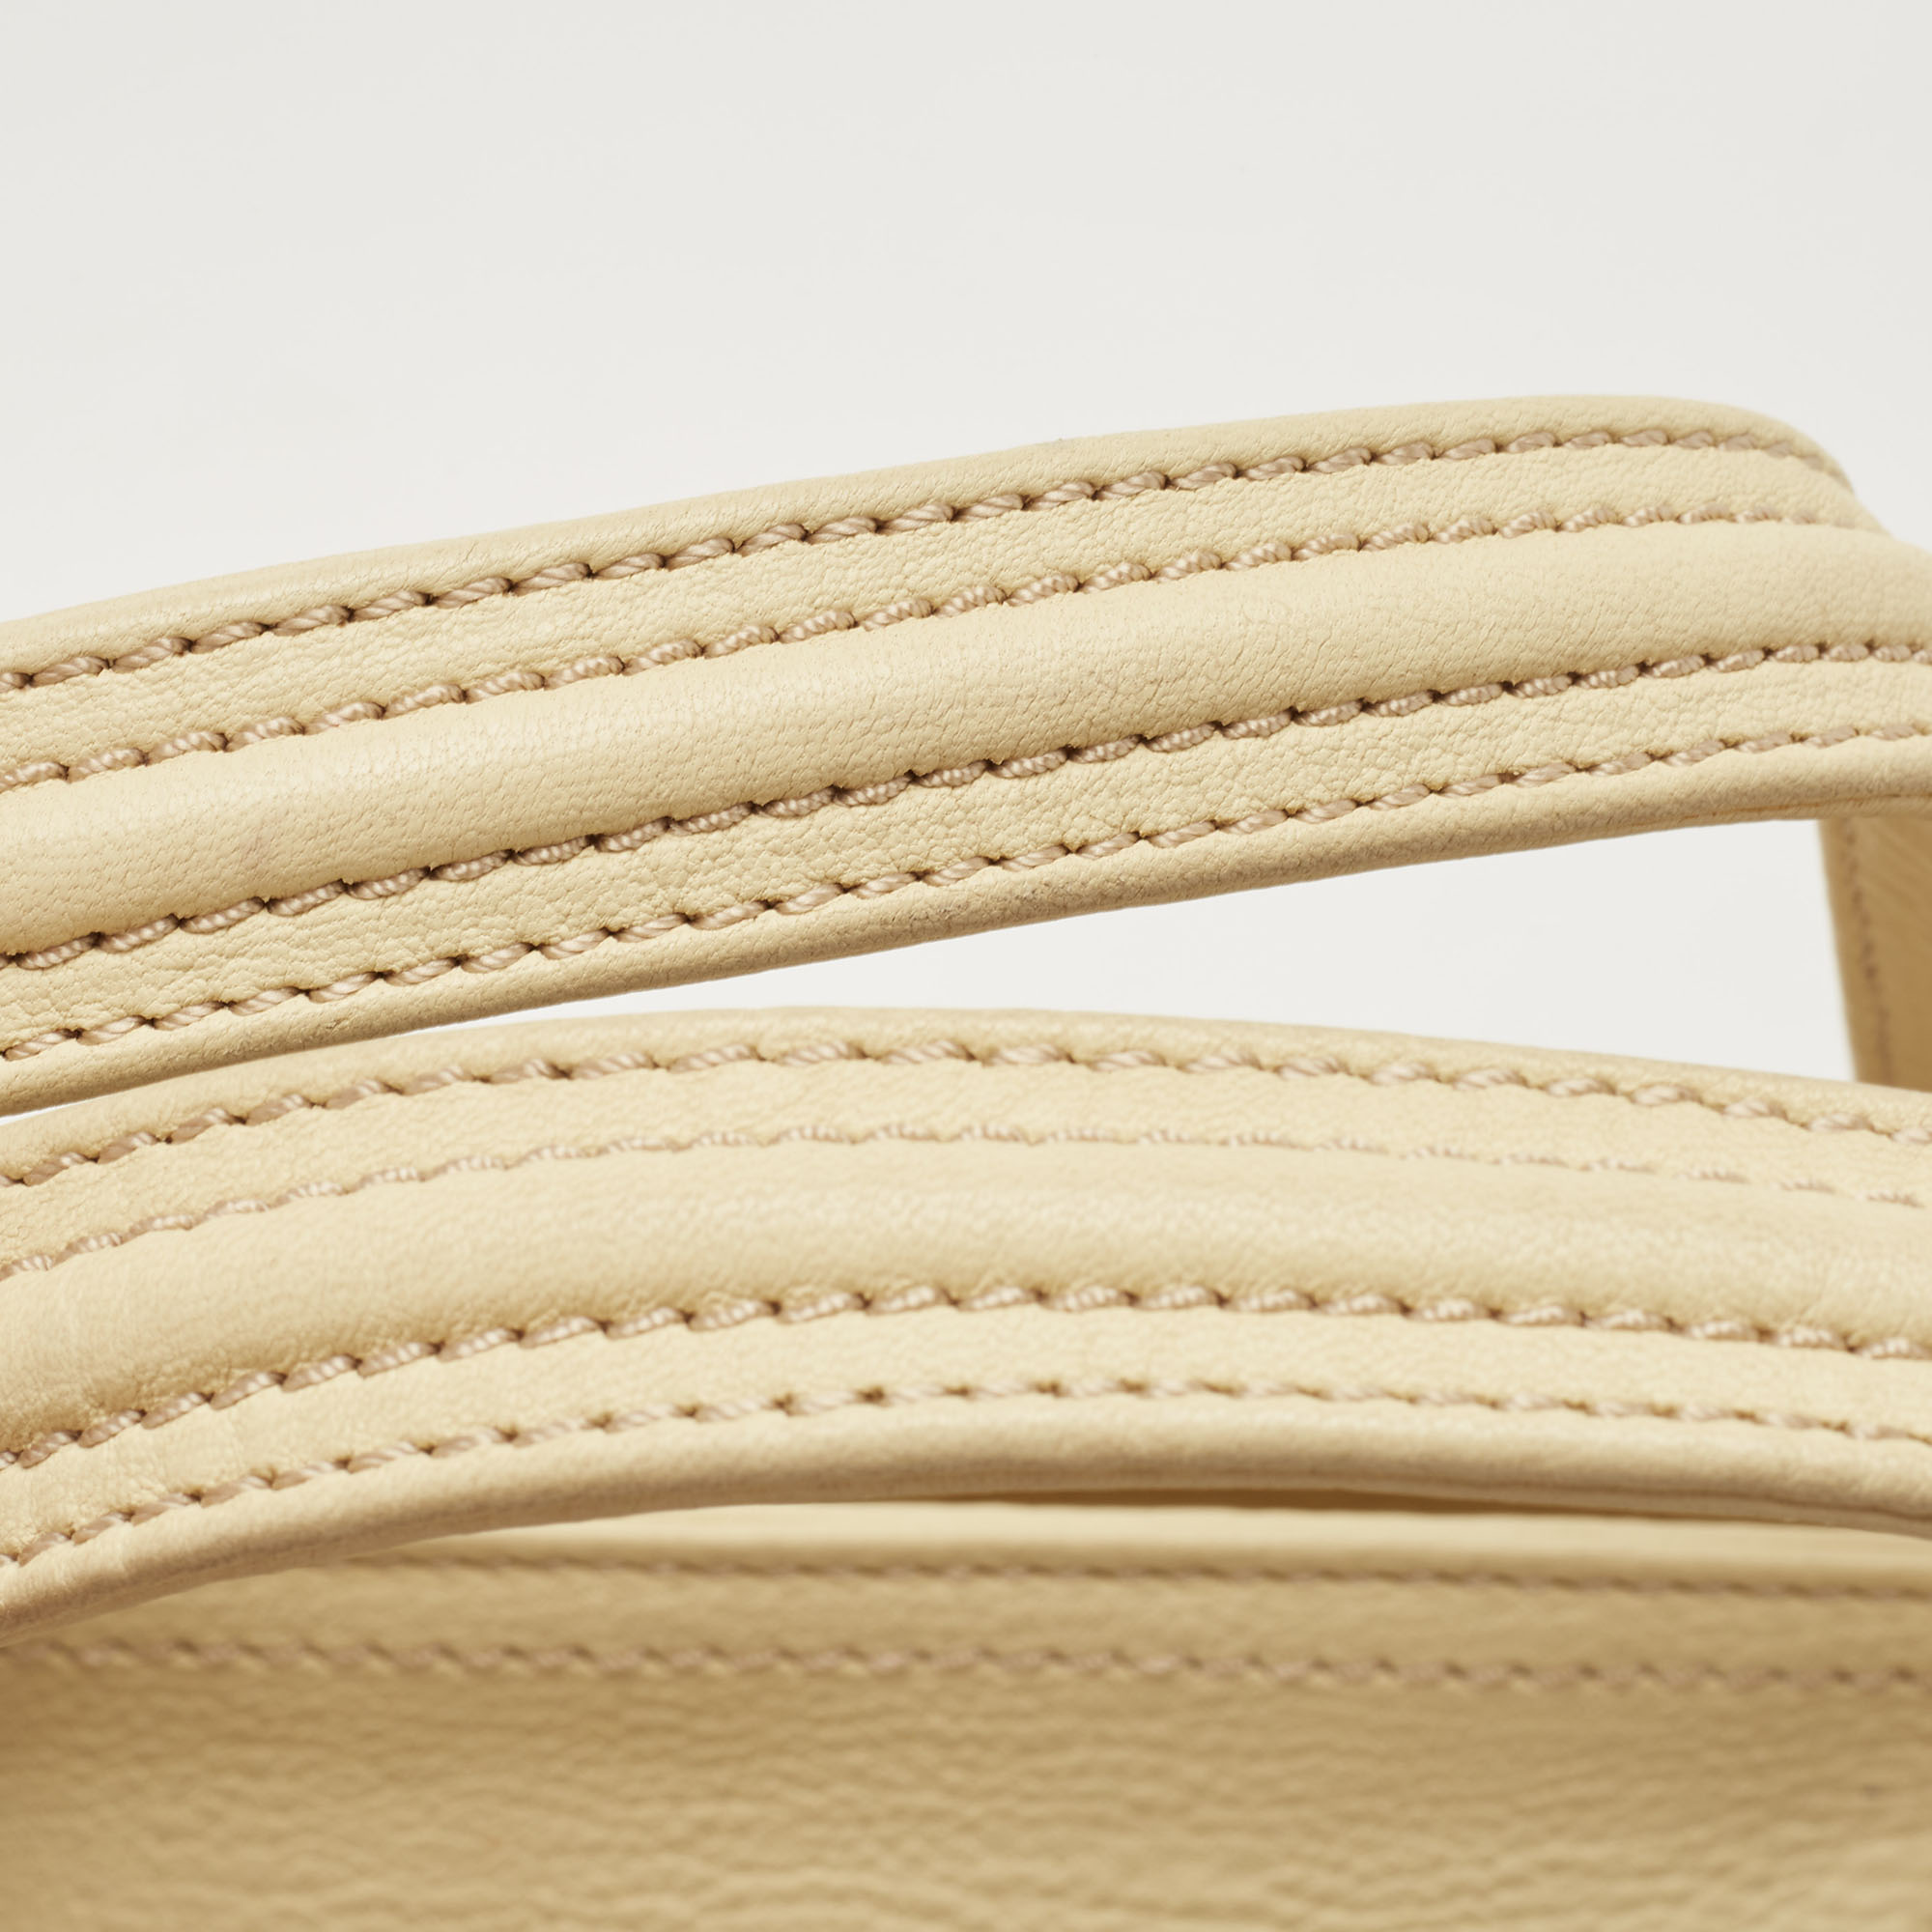 Burberry Light Yellow Leather Multiple Pocket Shoulder Bag